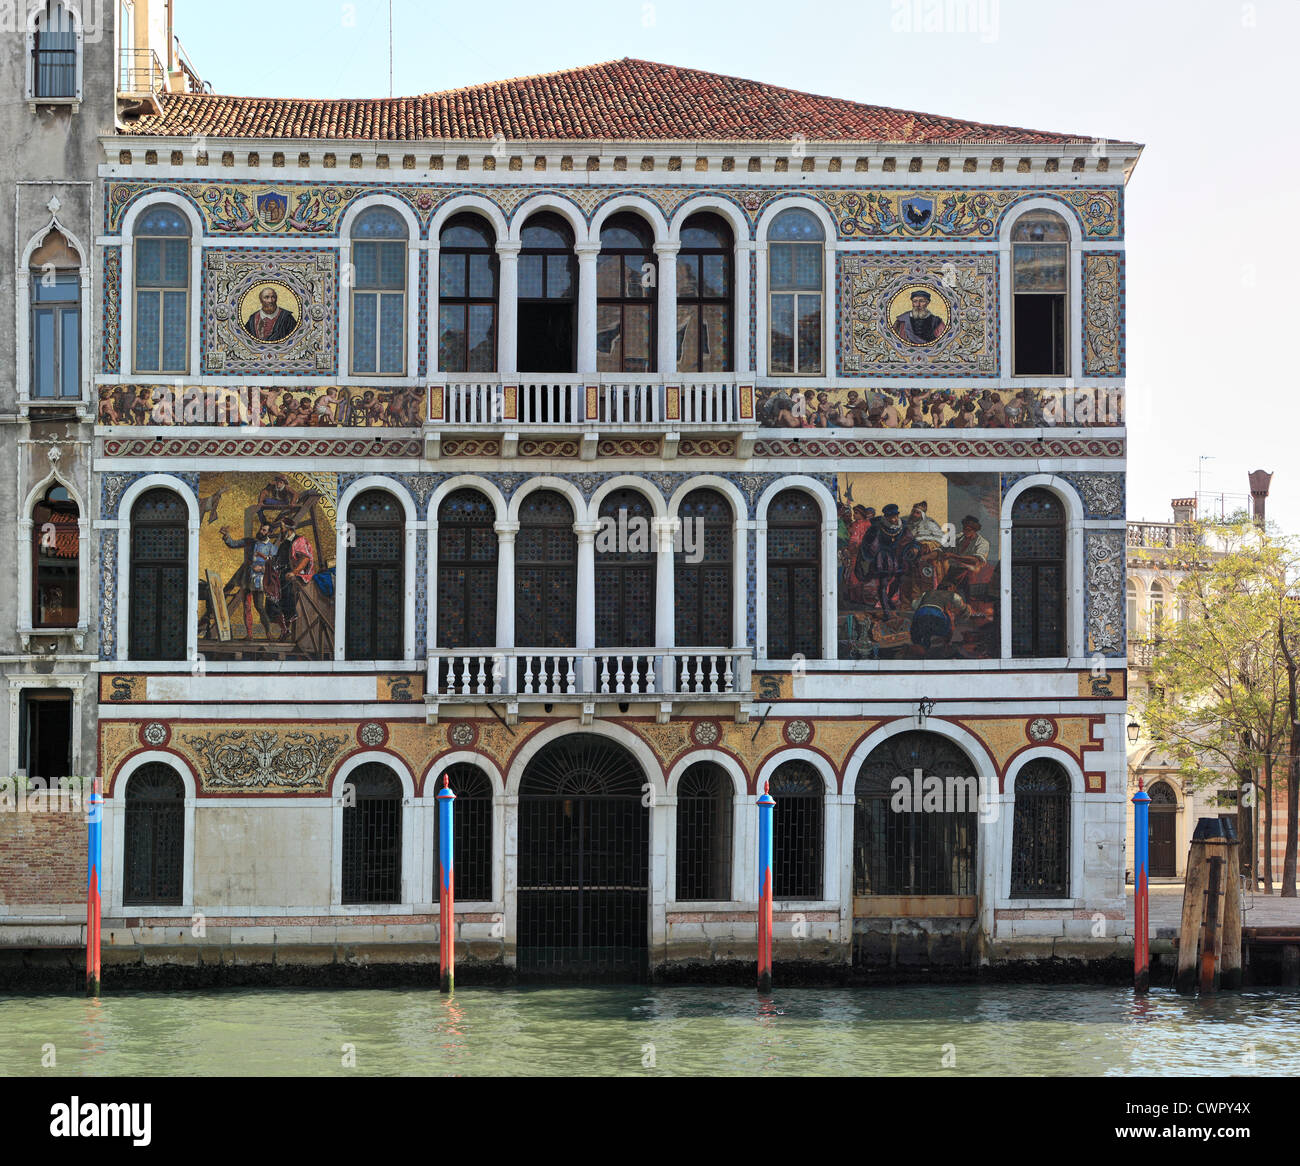 Palazzo Barbarigo, 16th century palace. Facade decorated with mosaics of Murano glass. Stock Photo